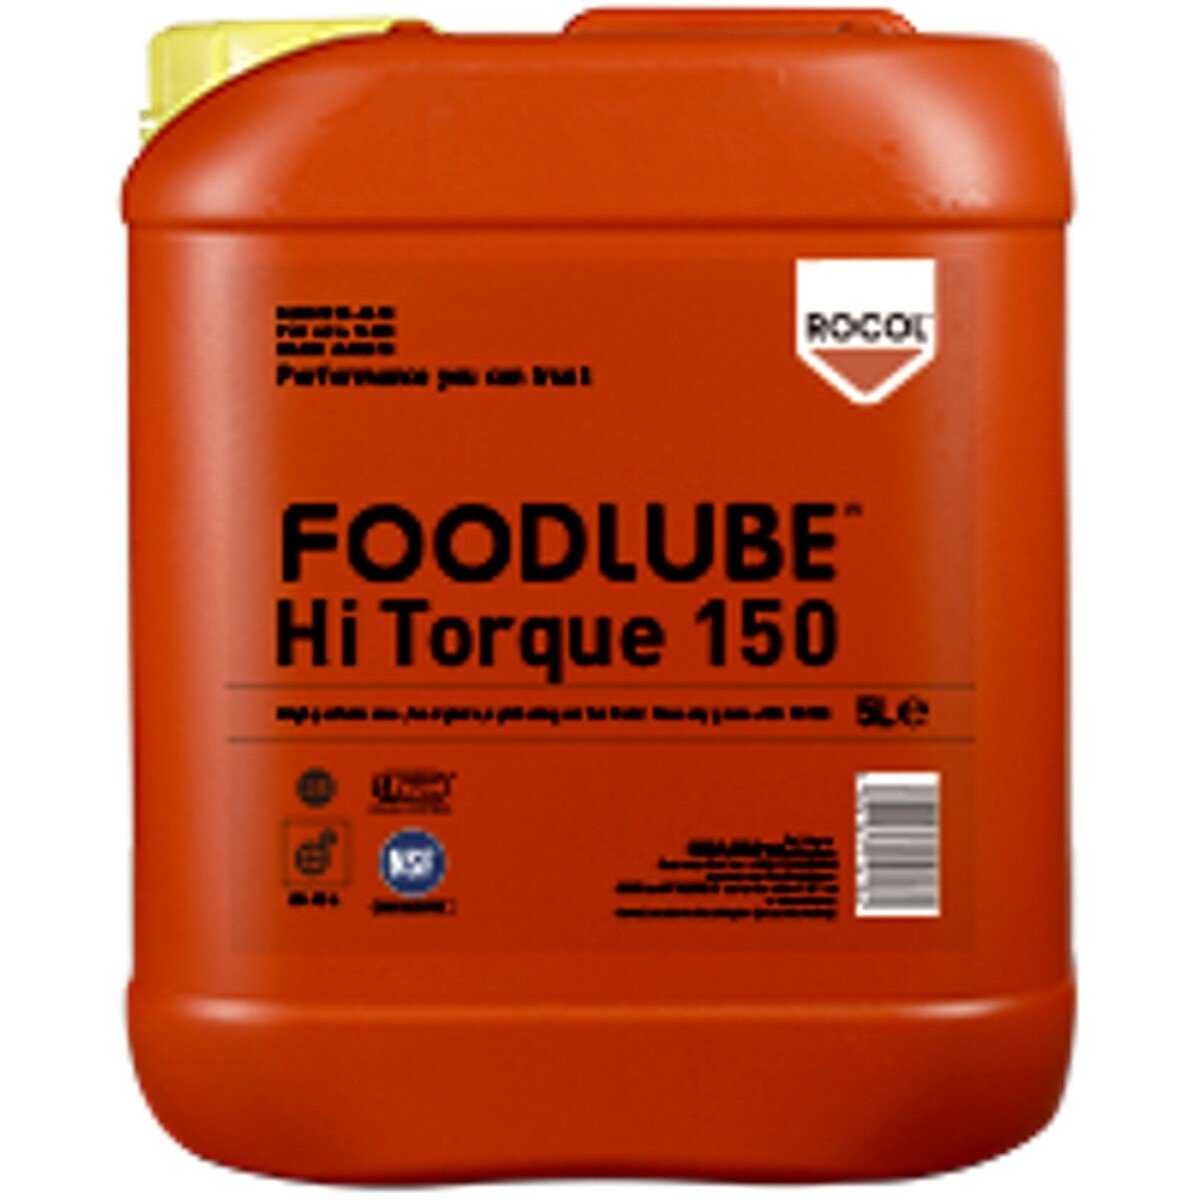 Rocol 15426 Foodlube Hi Torque 150 (with SUPS) Gear Fluids (NSF Registered) 5ltr